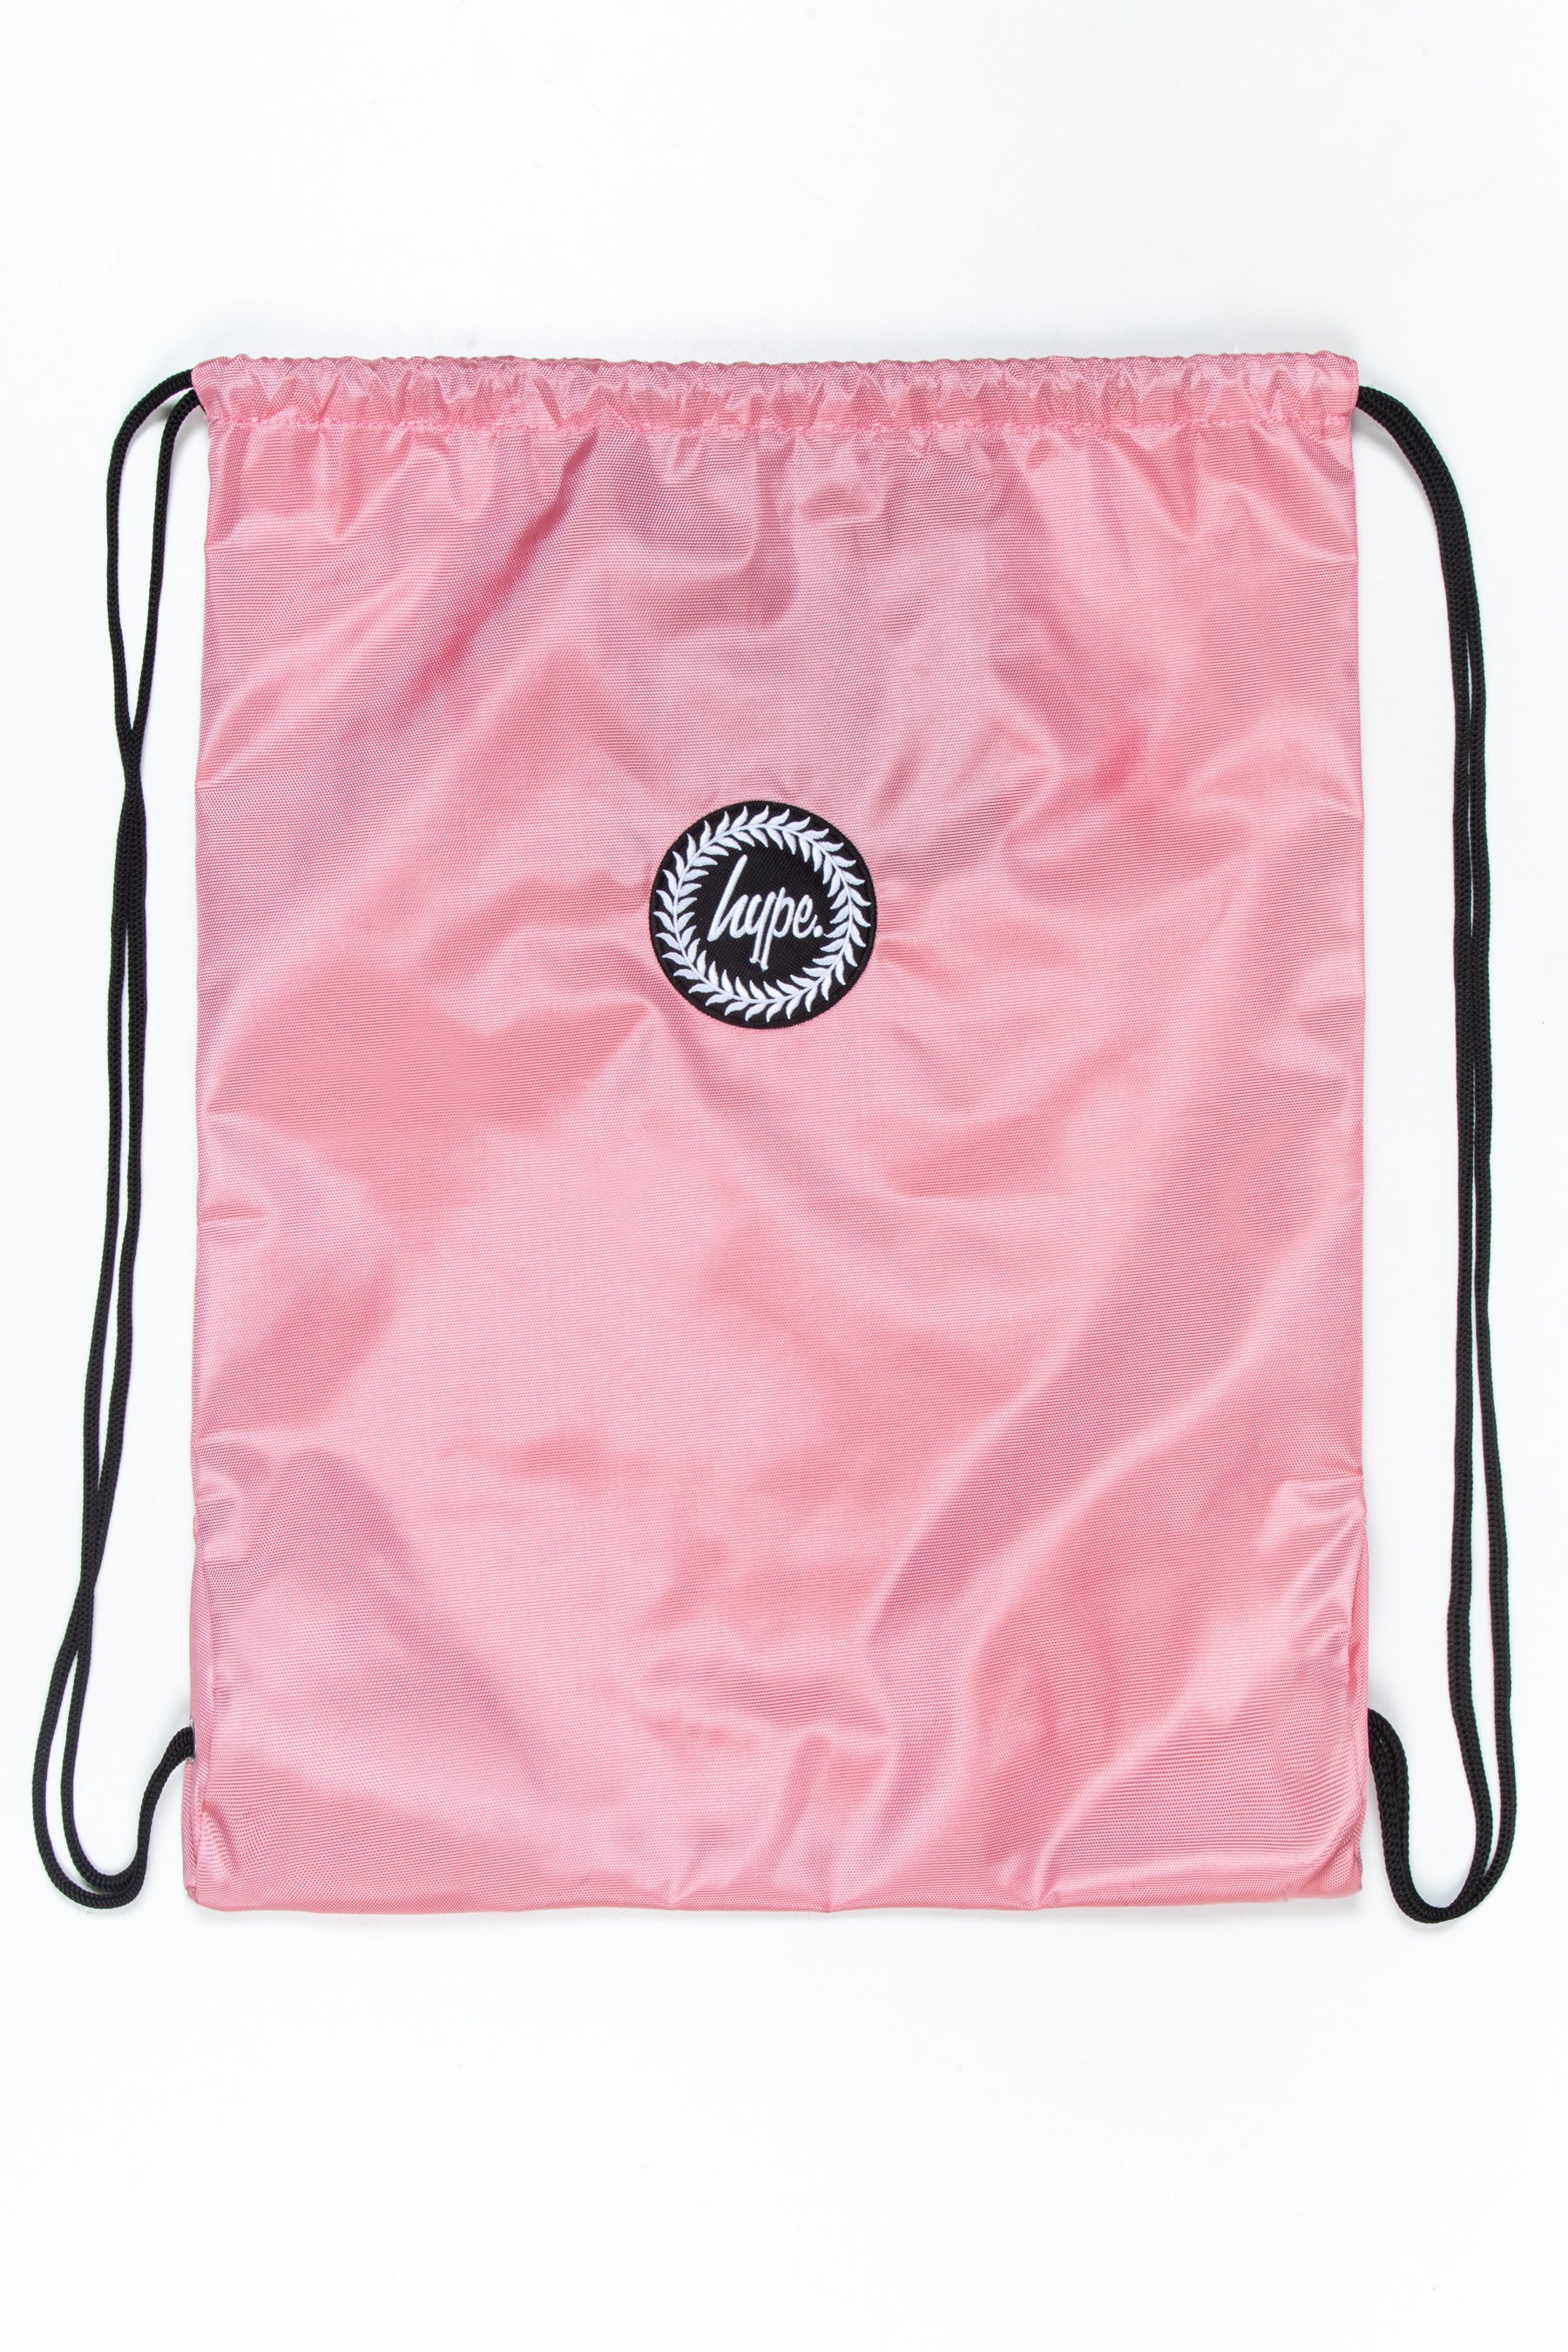 hype crest pink drawstring bag